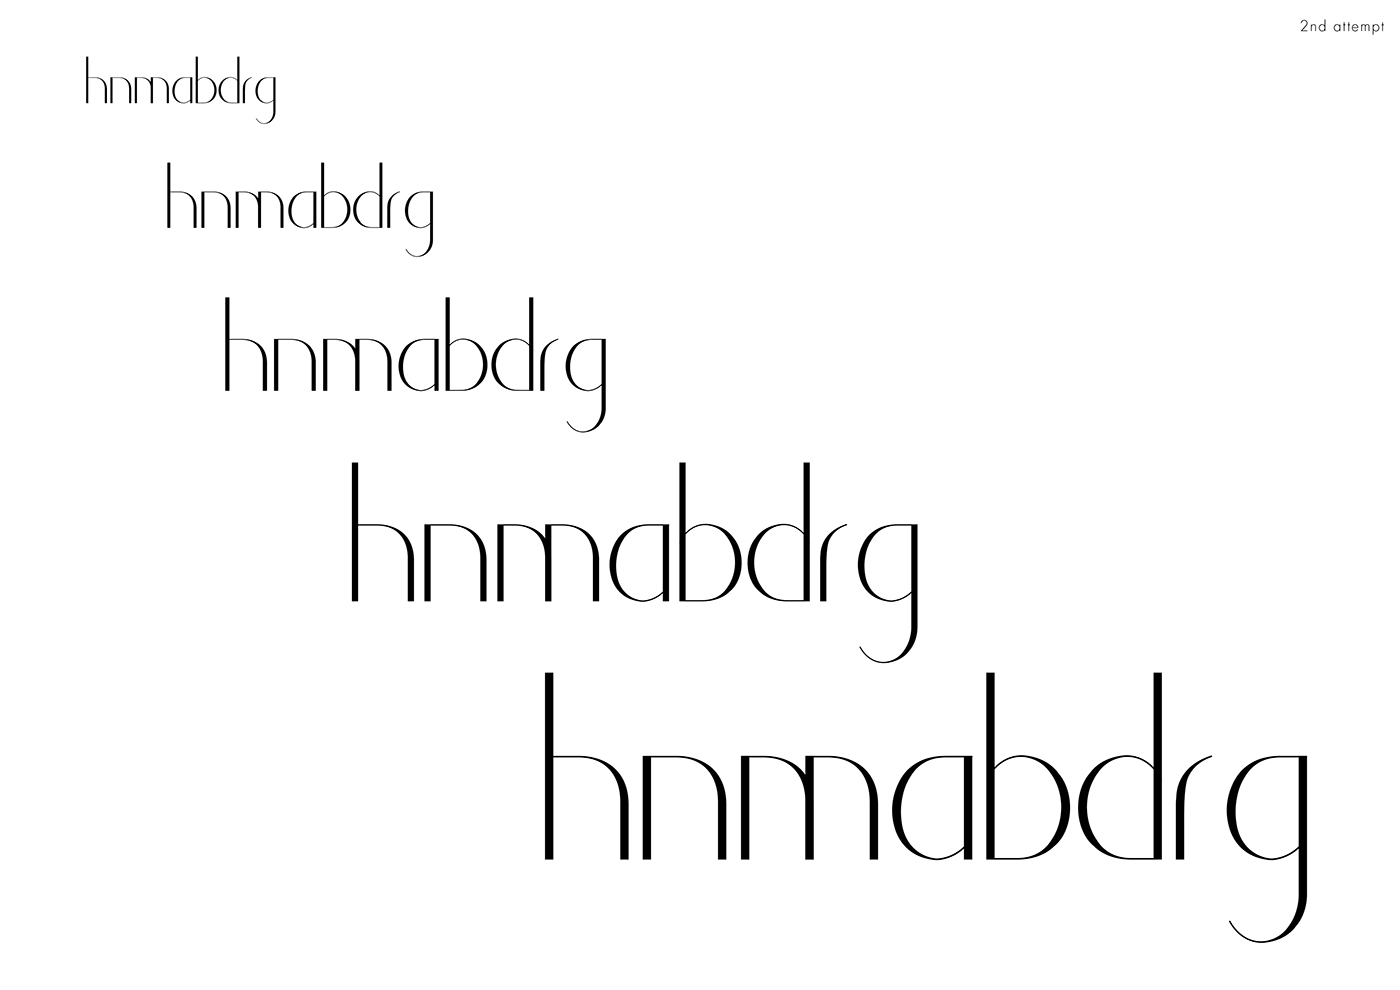 #typeface #type #geometric #sans serif #font #bonnie #Fashion #high end #narrow #Name #shape #form #Bon #good